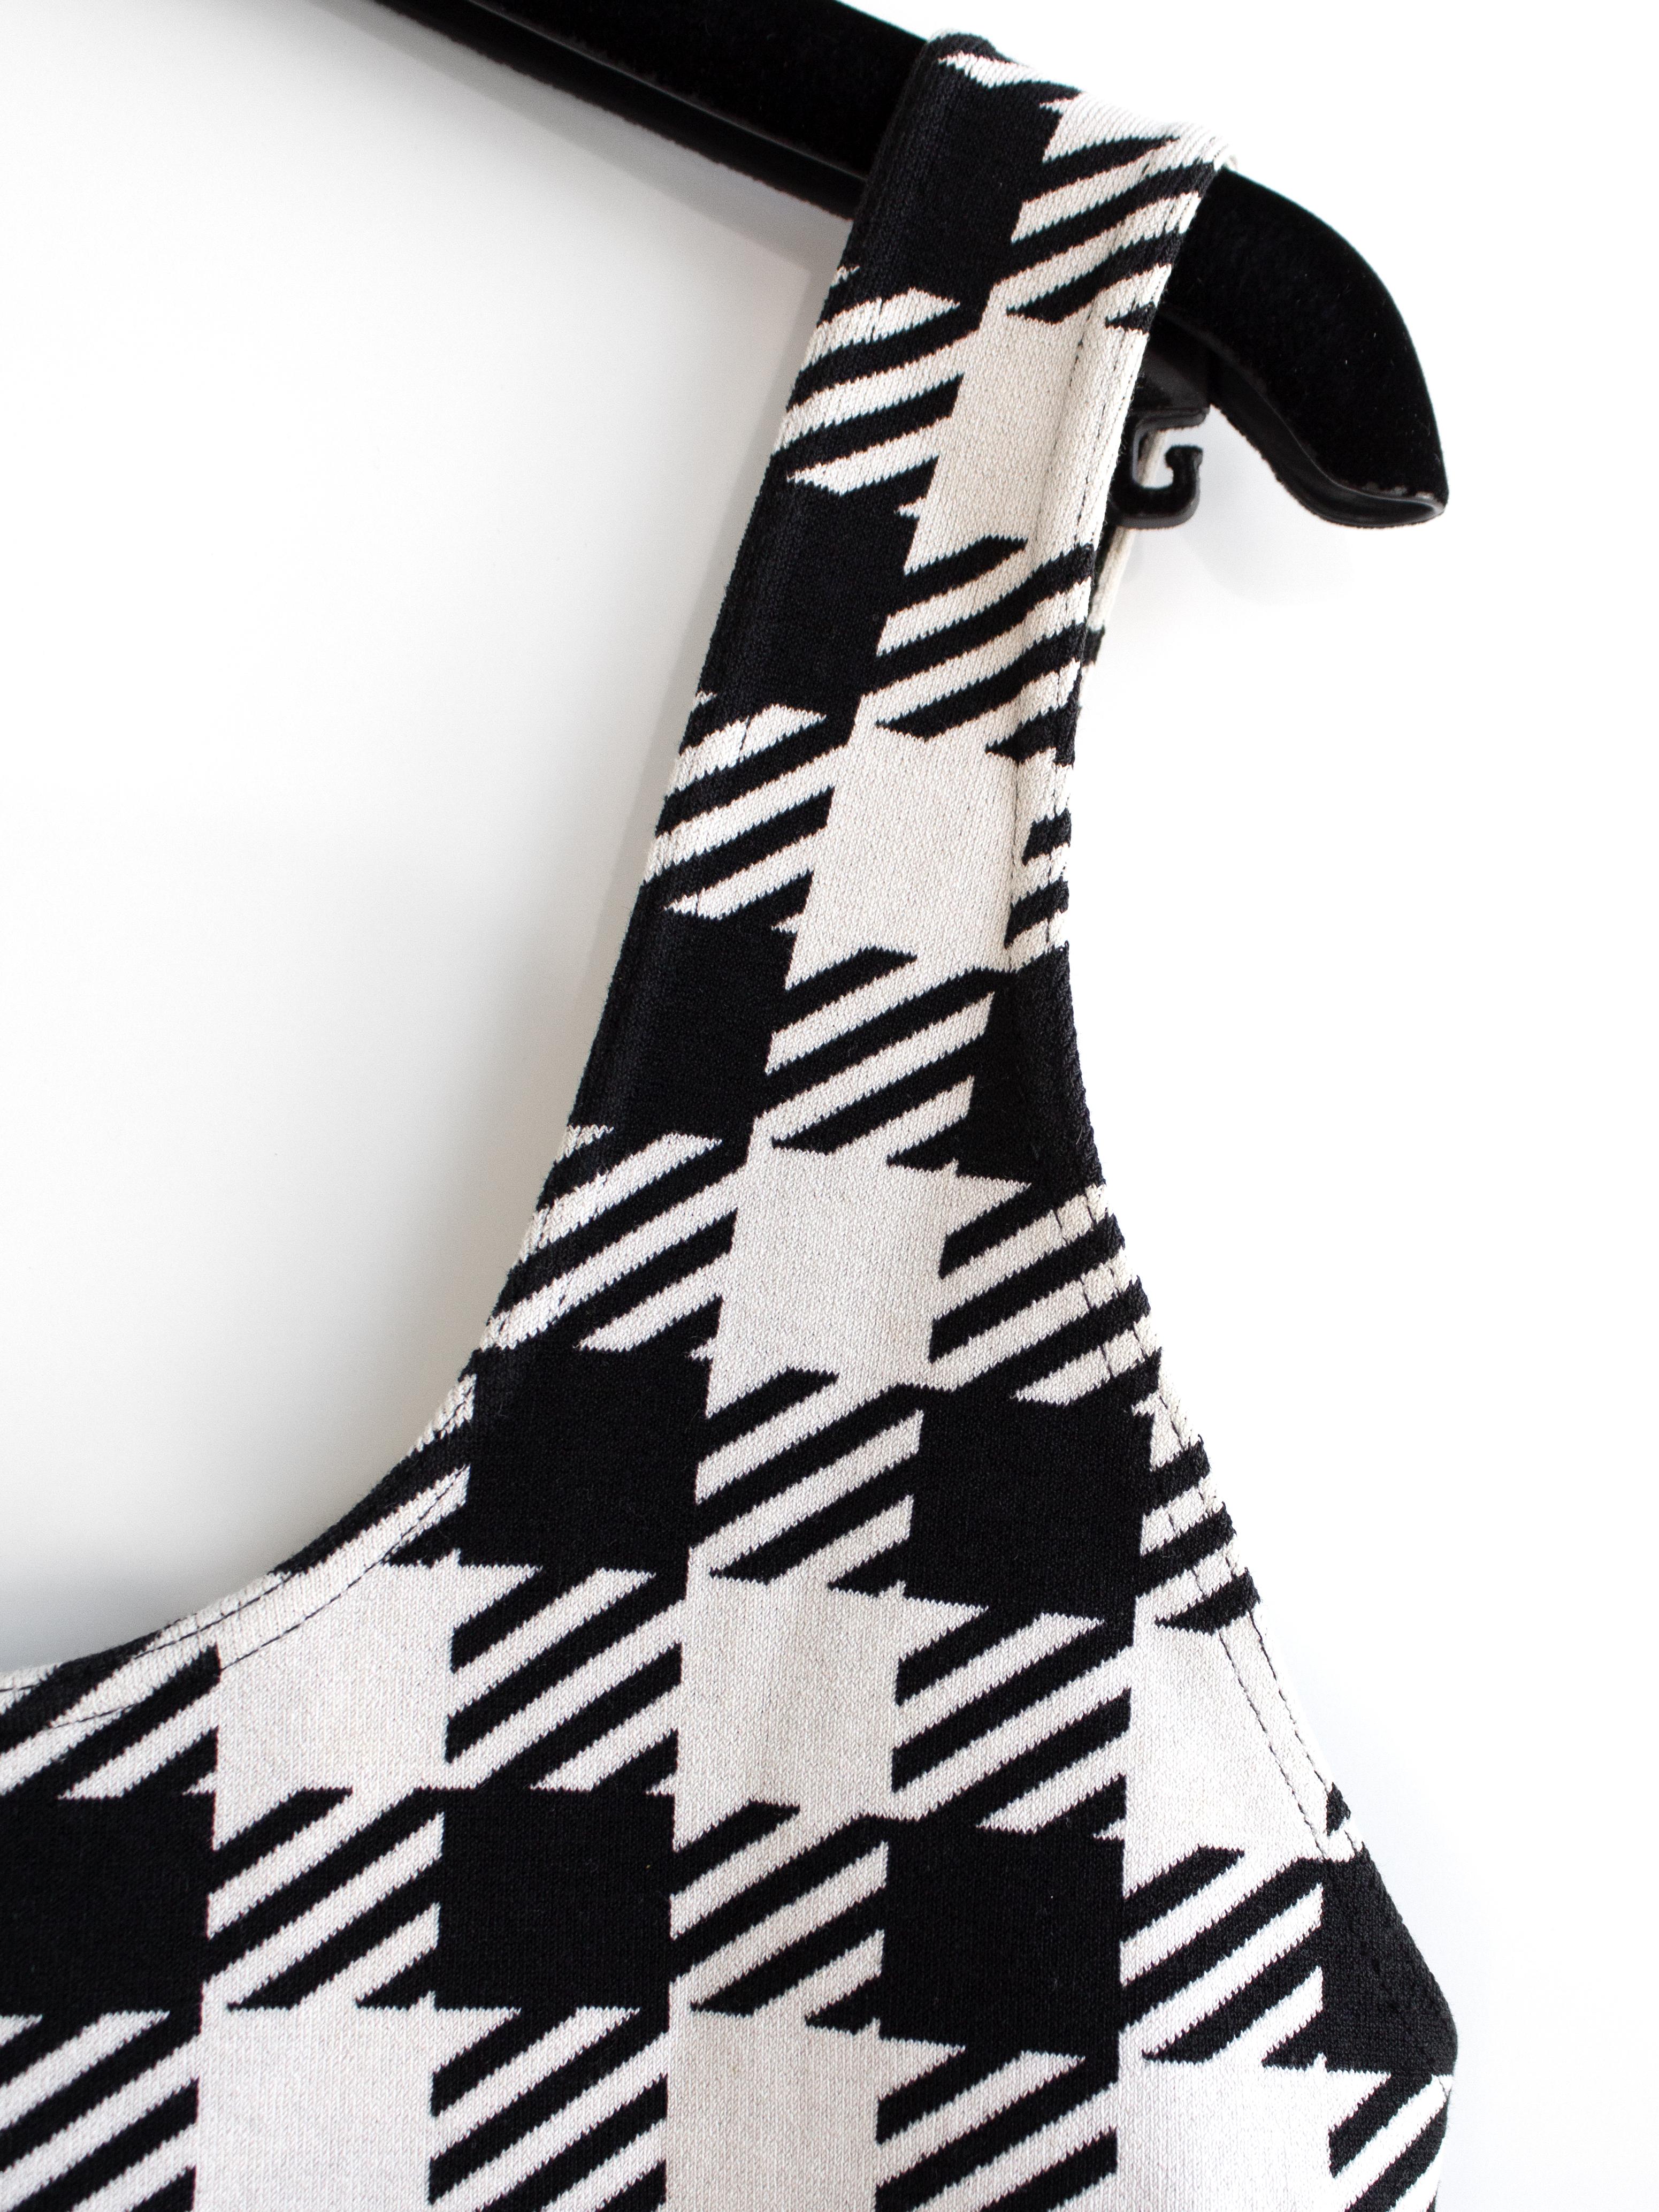 Rare Alaia Vintage S/S 1991 Tati Black White Houndstooth Print Mini Dress For Sale 4